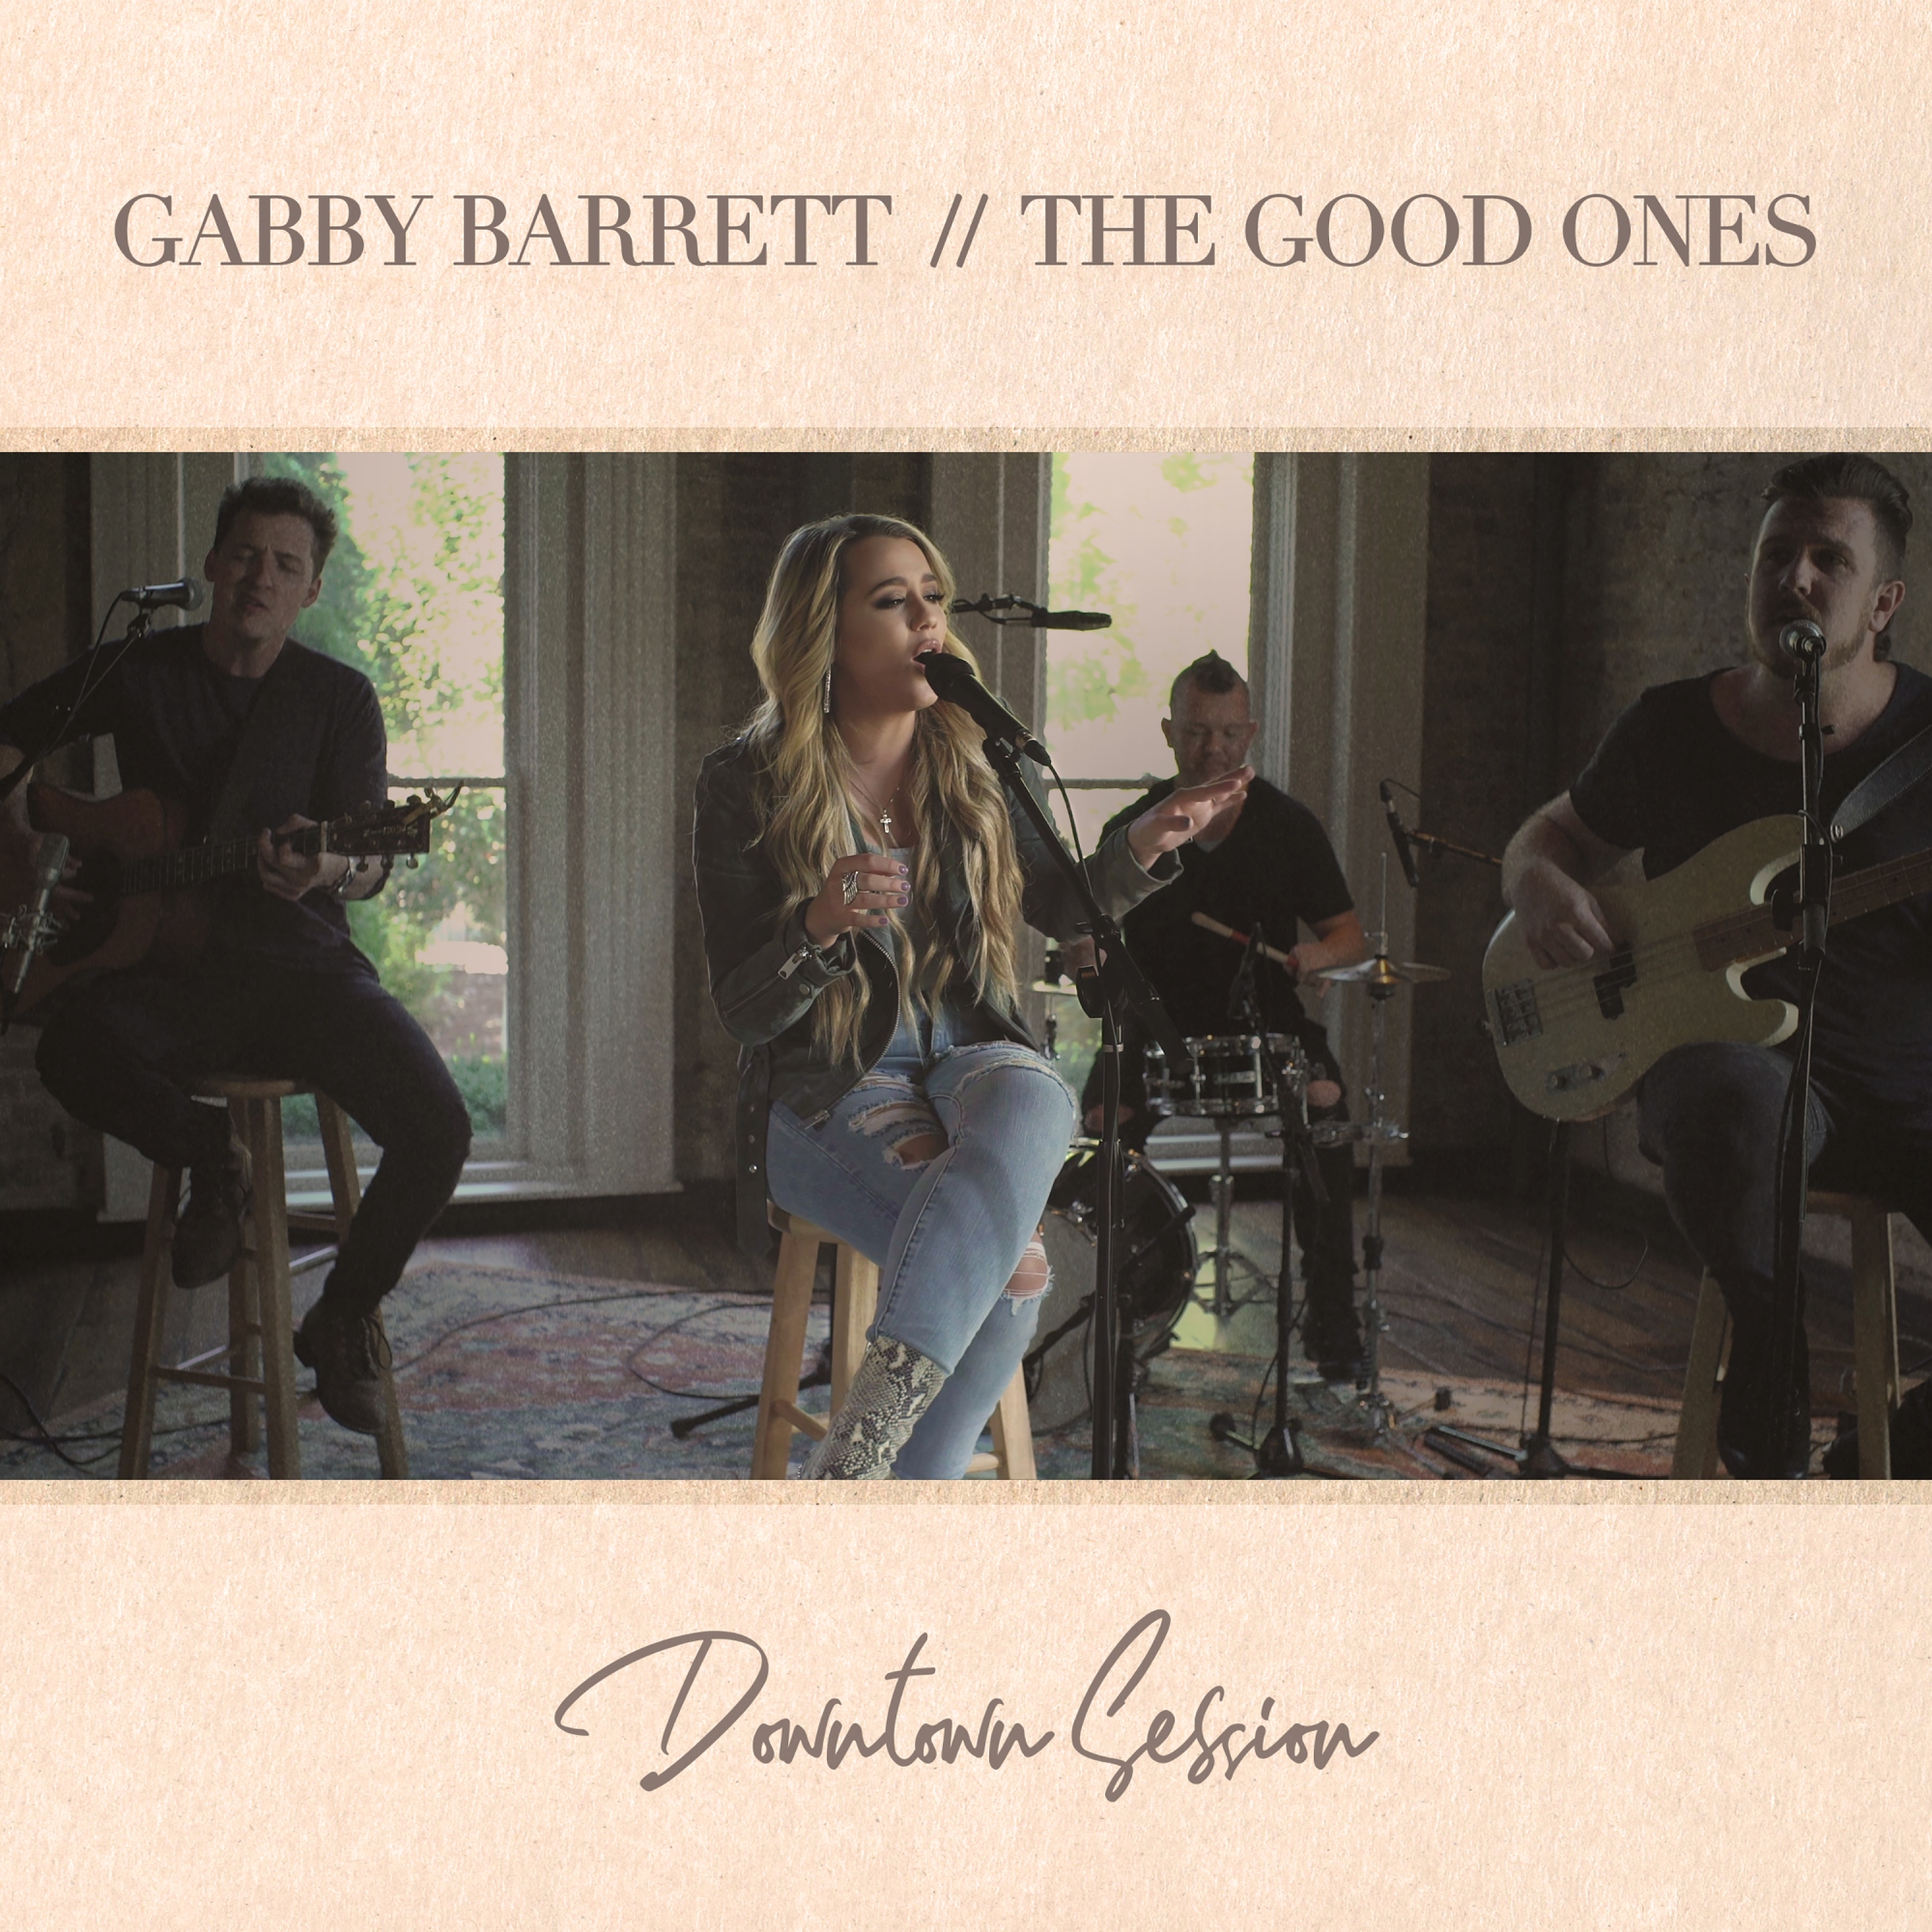 Gabby Barrett - The Good Ones (Downtown Session)
Released: December 20, 2019 
Label: Warner Music Nashville
